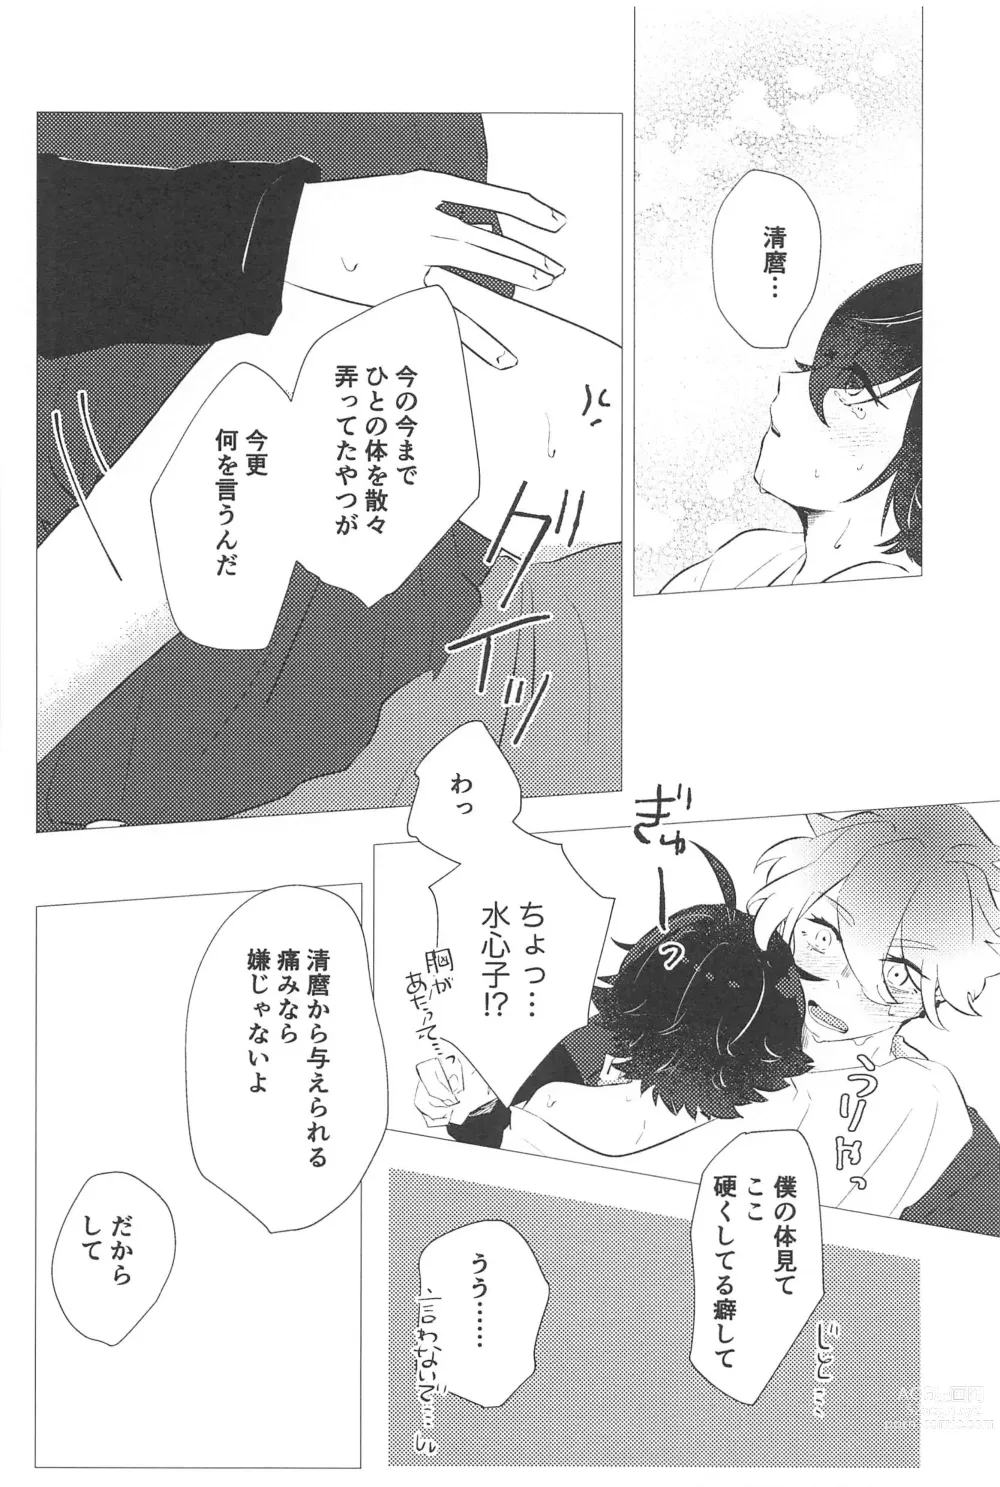 Page 21 of doujinshi Konnanotte Nai!